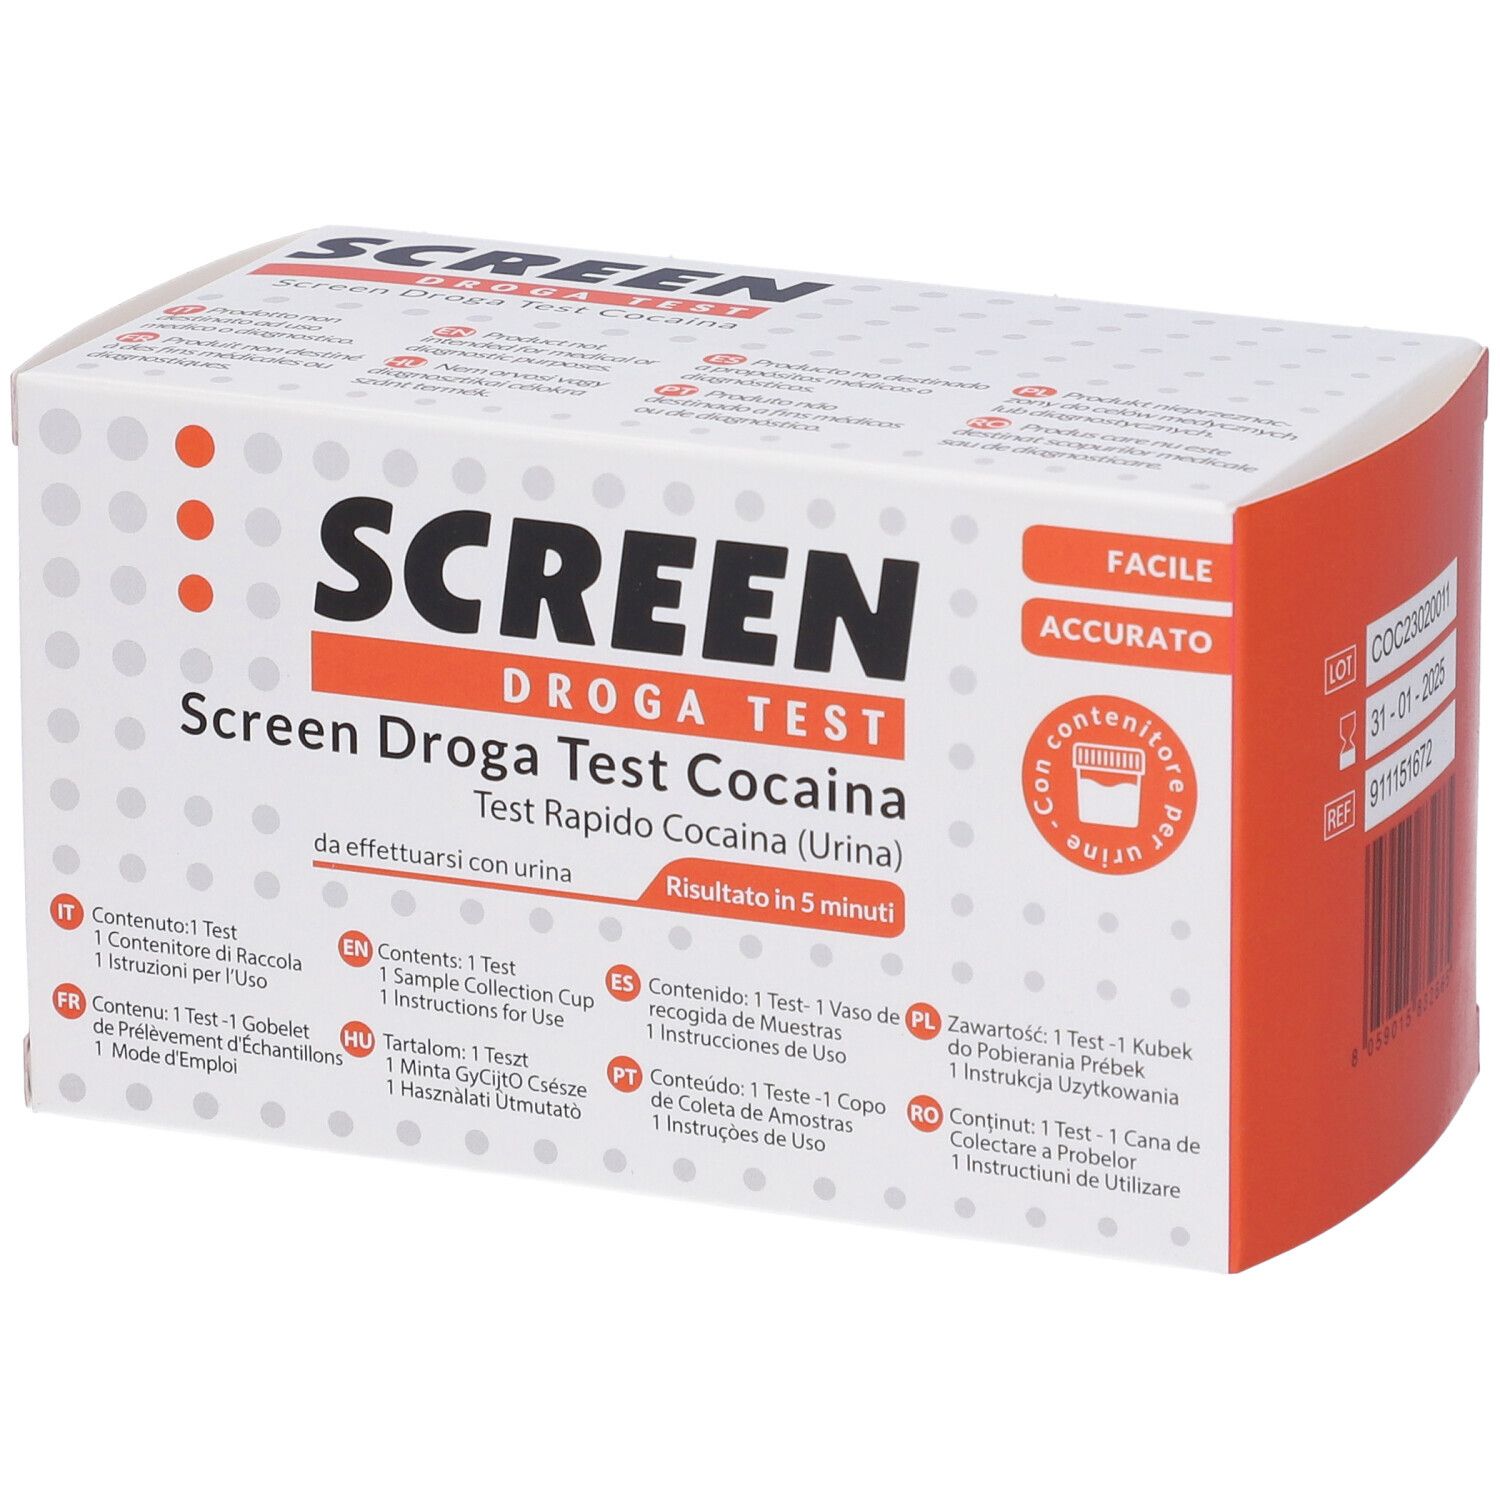 Droga test che rileva una sostanza cocaina screen droga testcocaina